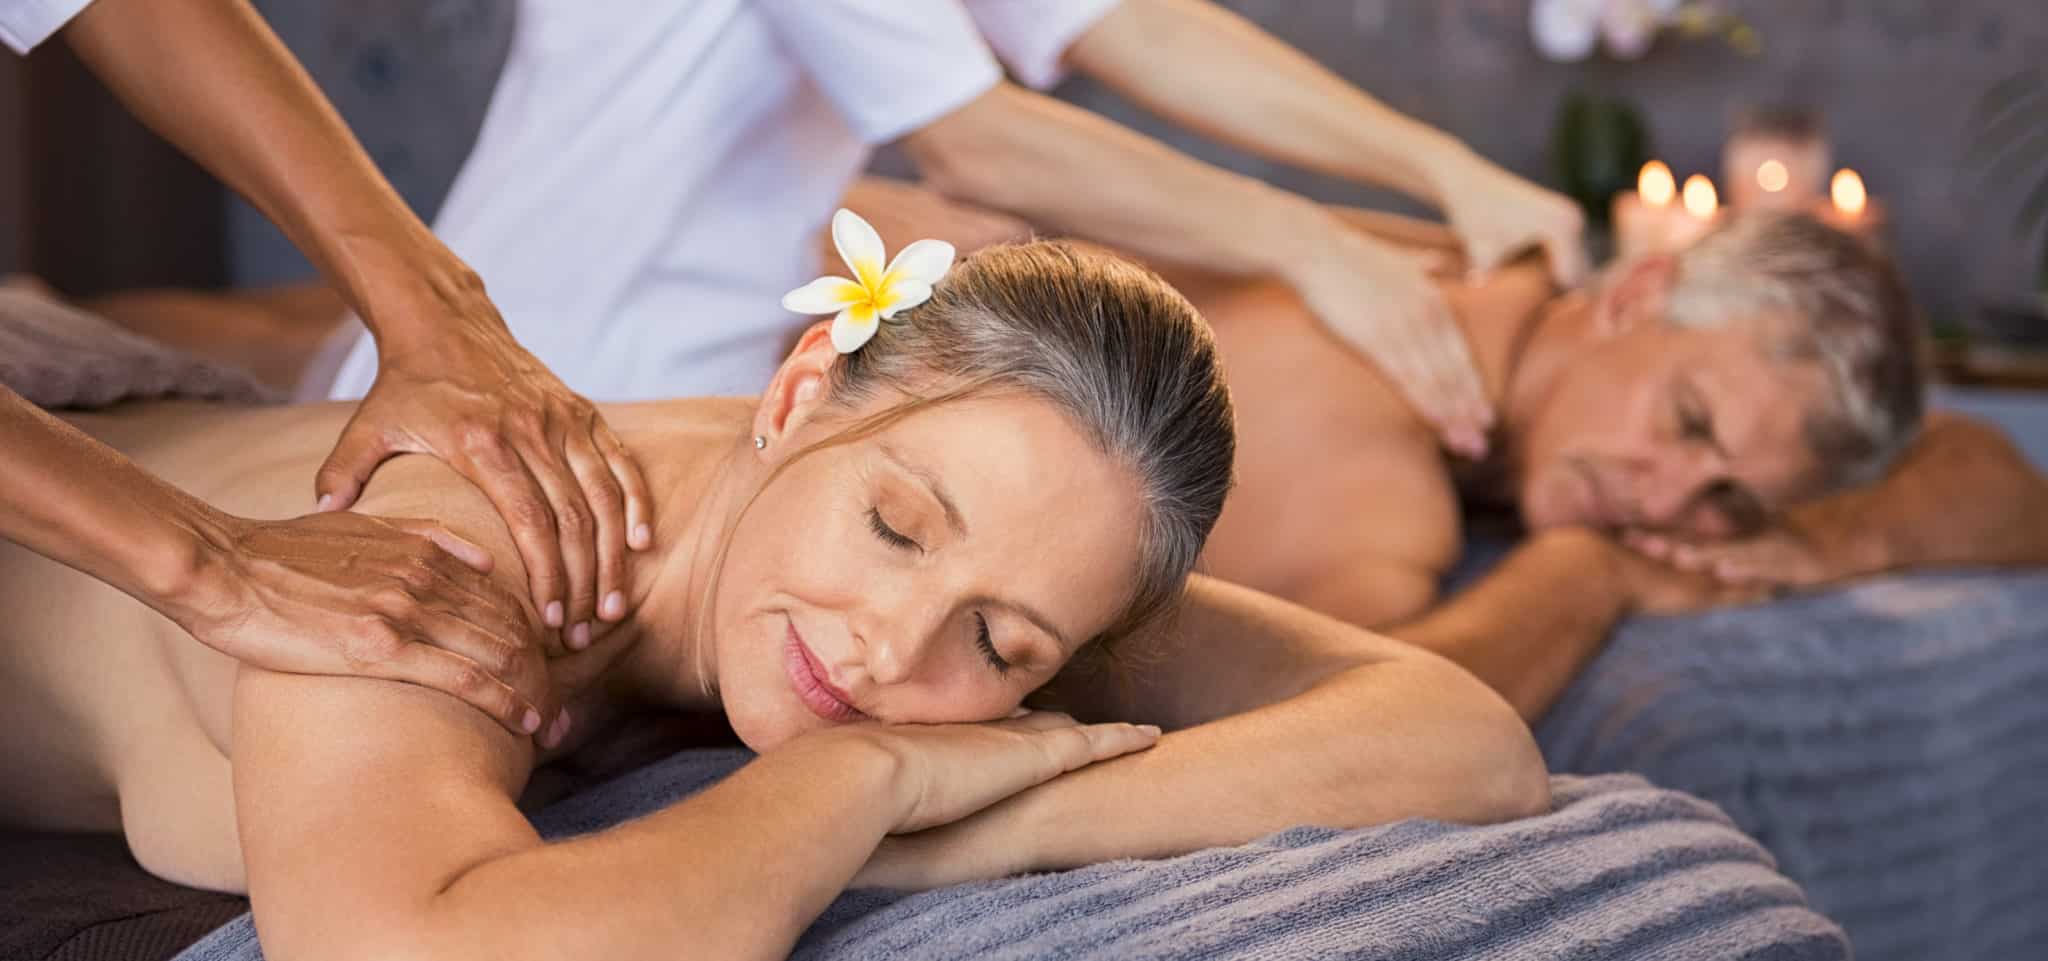 Couples Massage Benefits In Honolulu